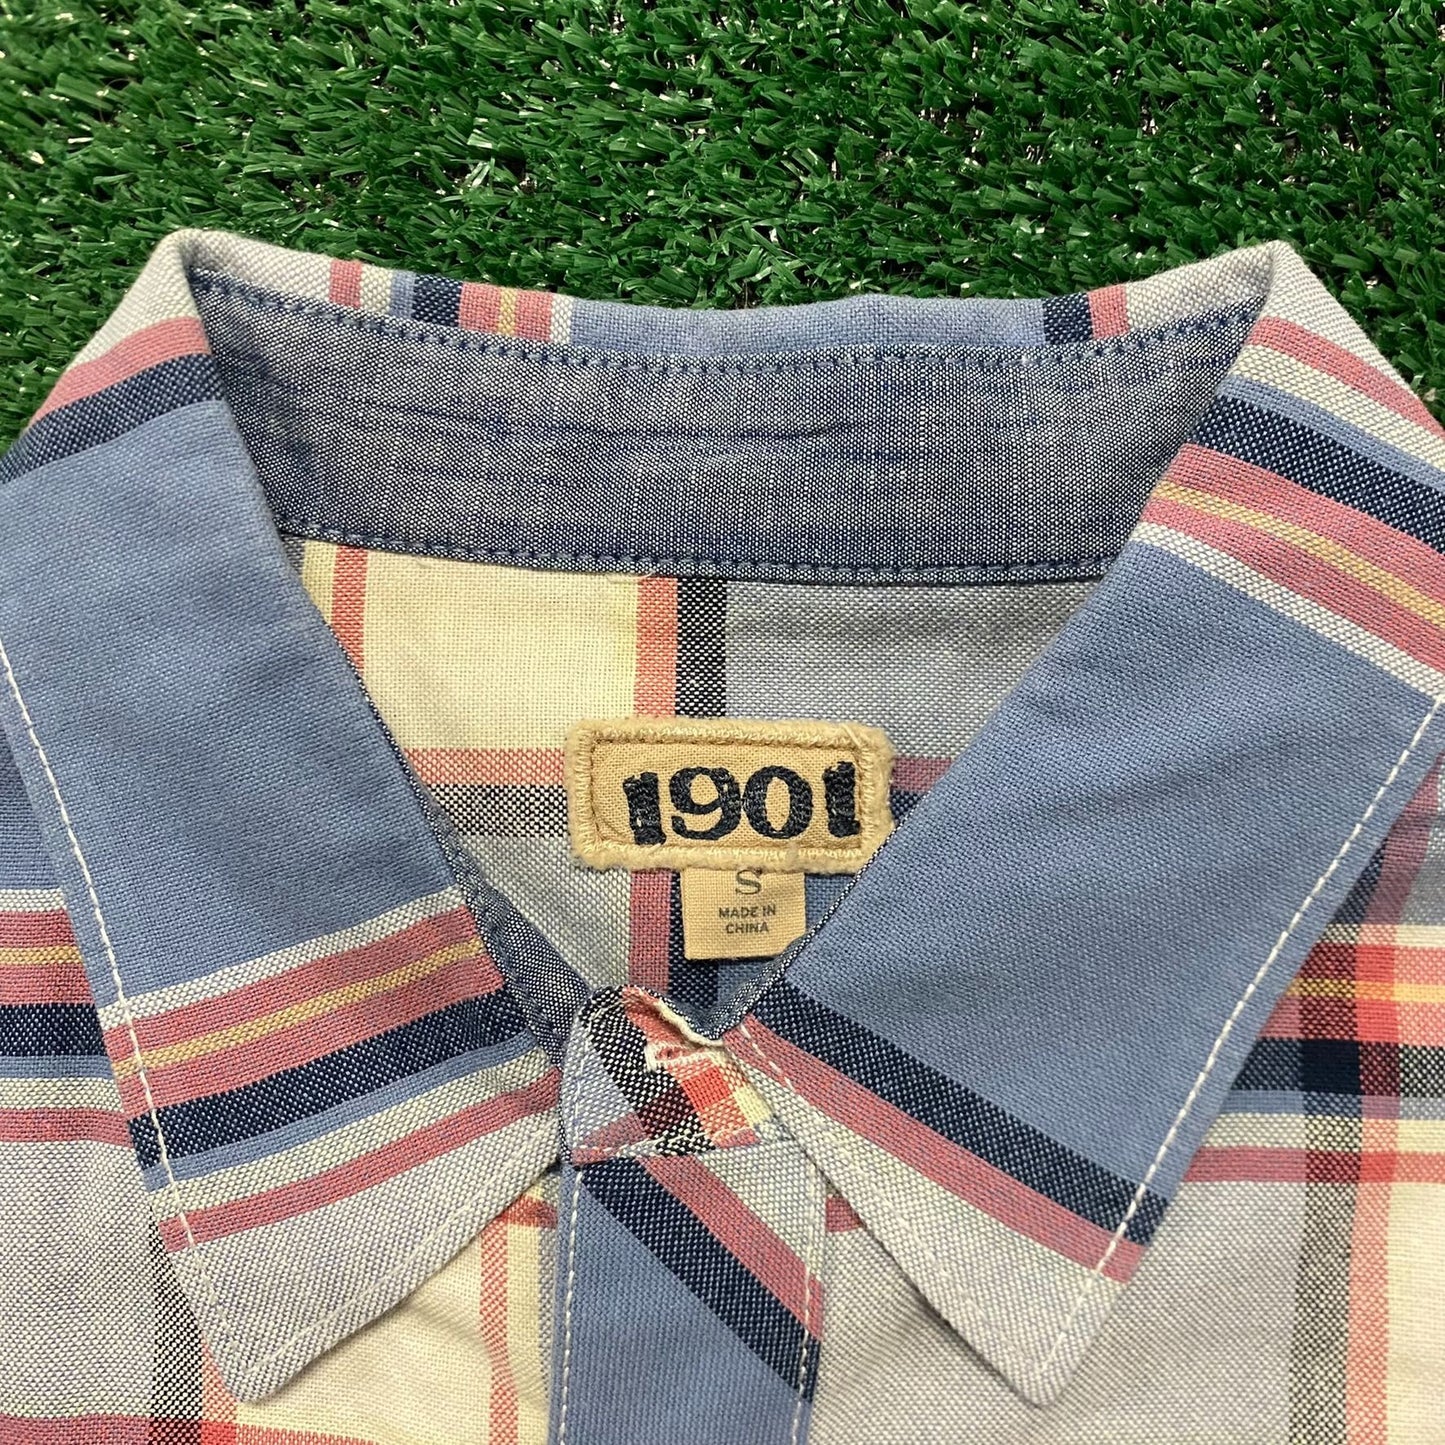 1901 Plaid Check Vintage Button Up Casual Shirt